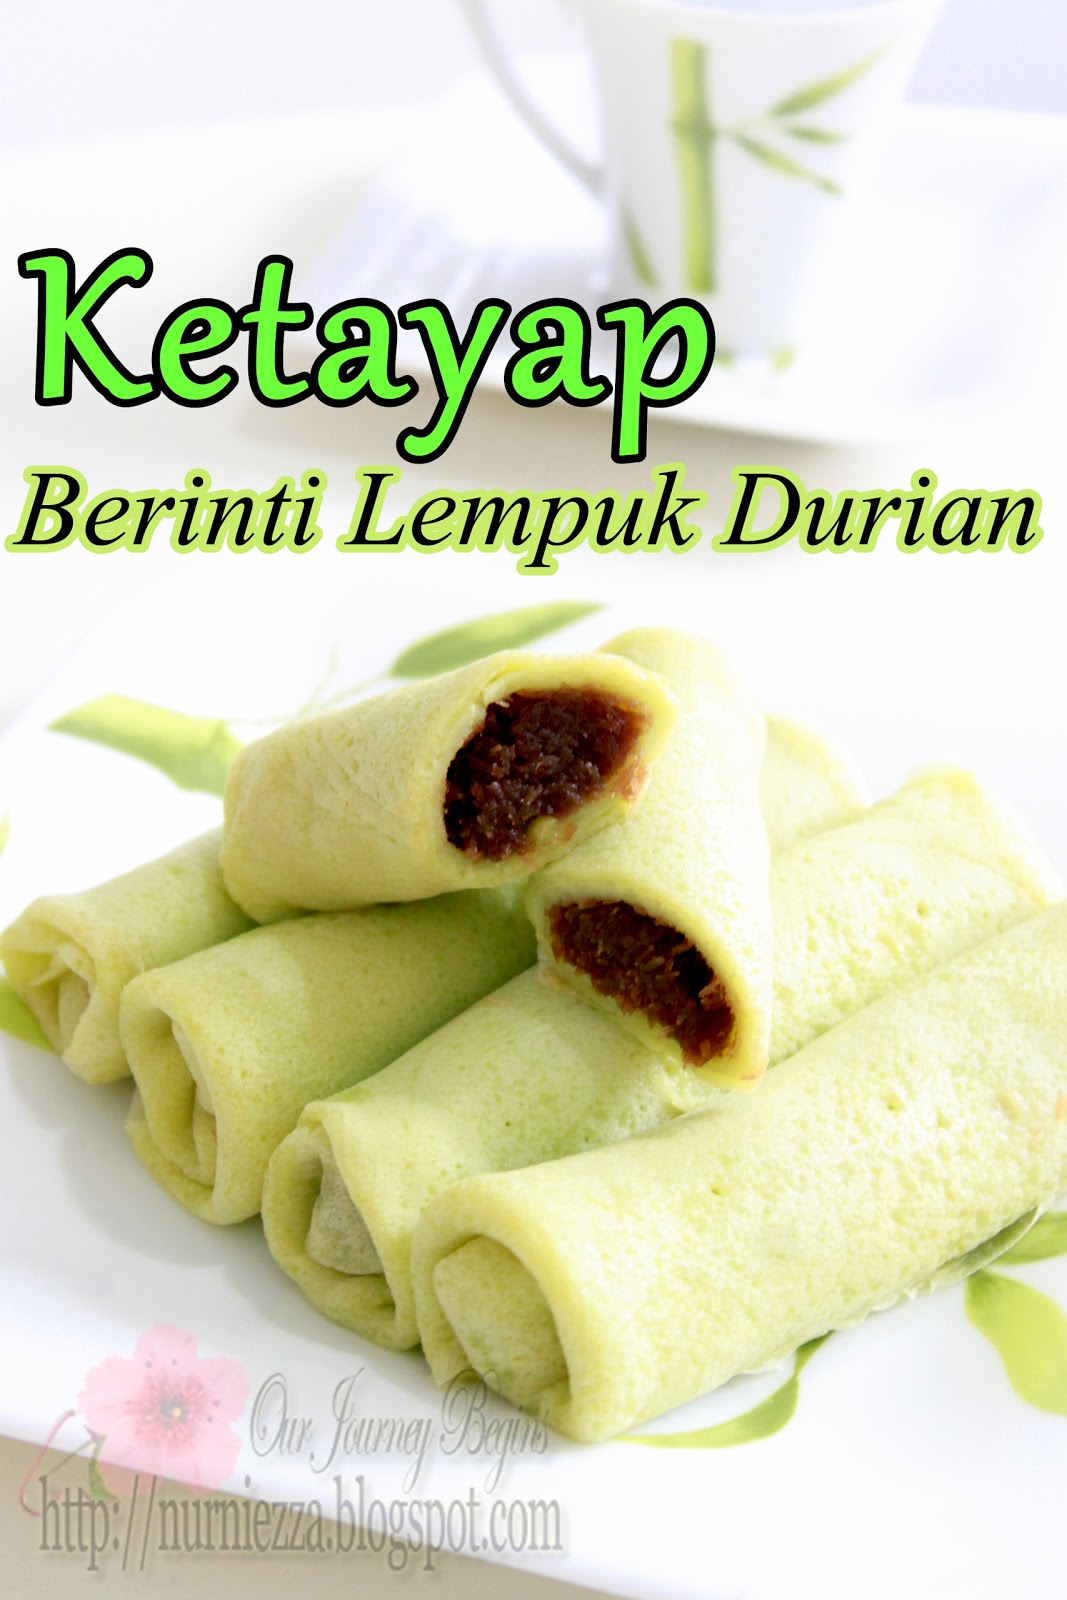 Our Journey Begins: Kuih Ketayap Berinti Lempuk Durian